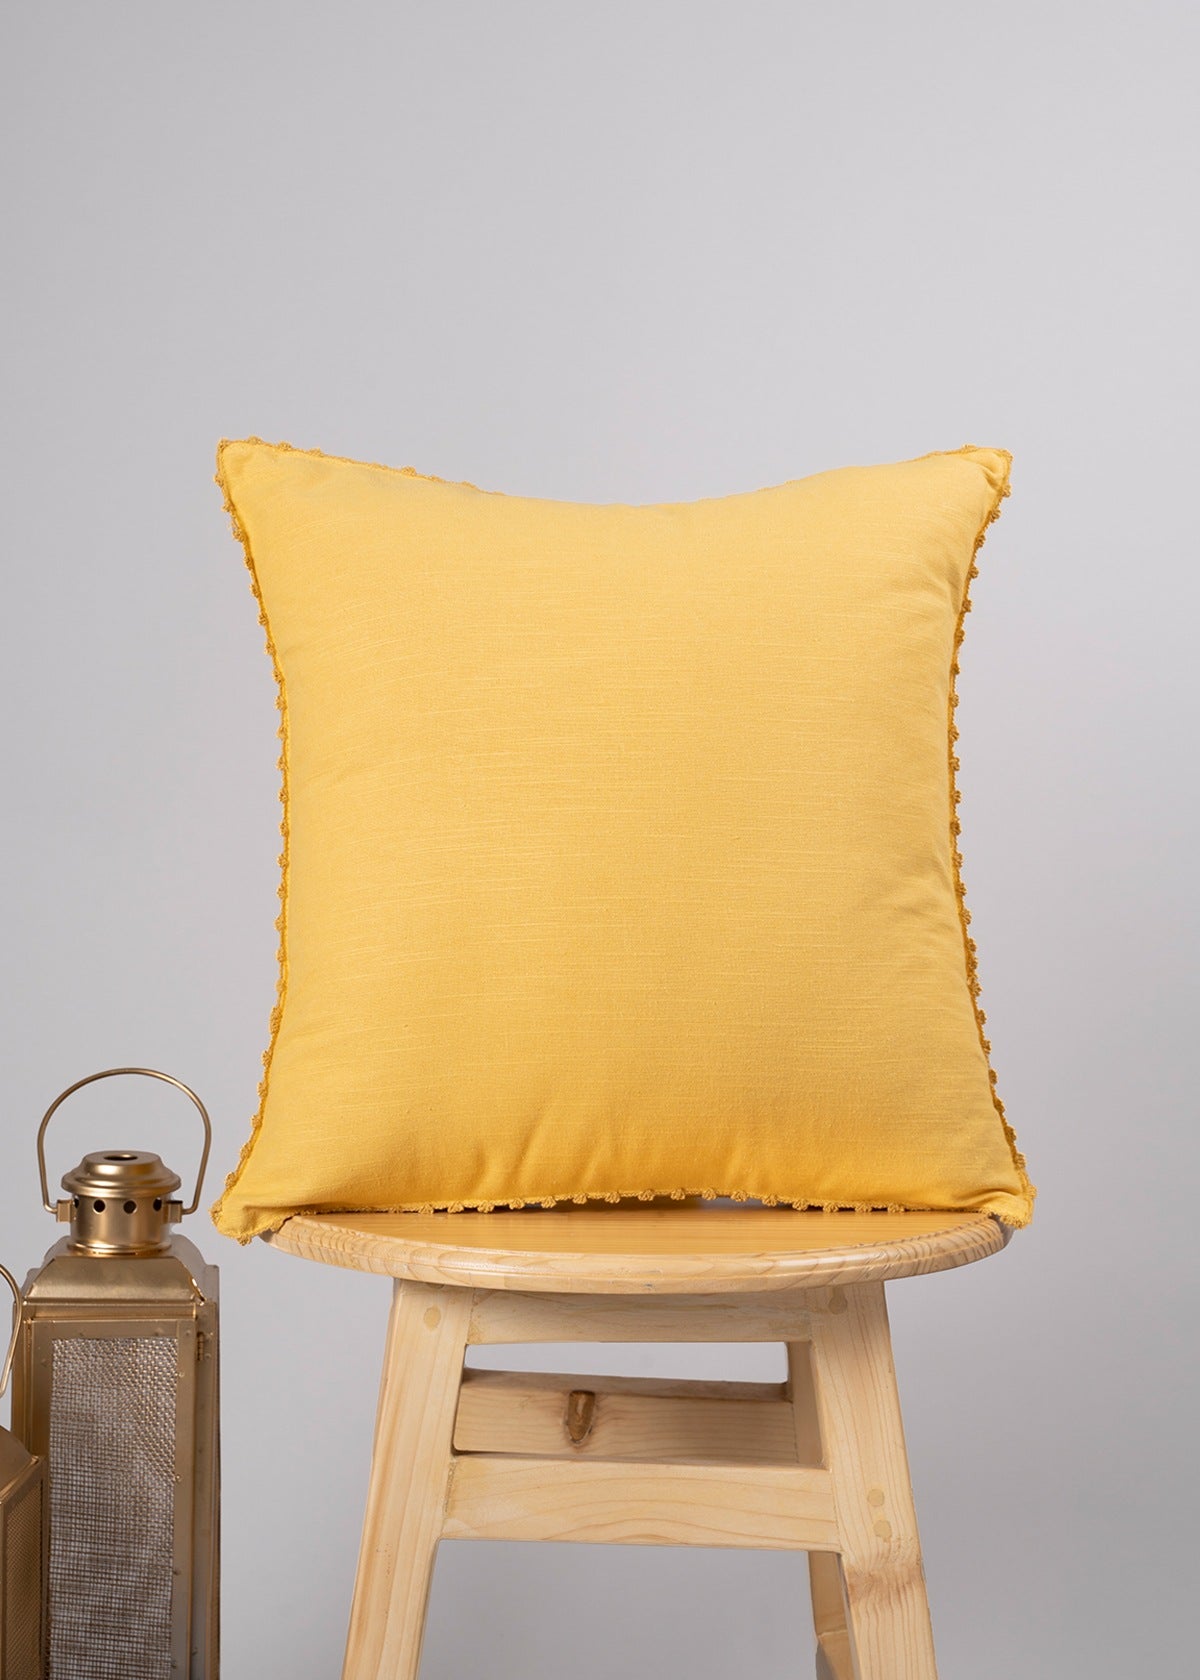 Terracotta Combo Set Of 4 Cotton Cushion Cover - Multicolor